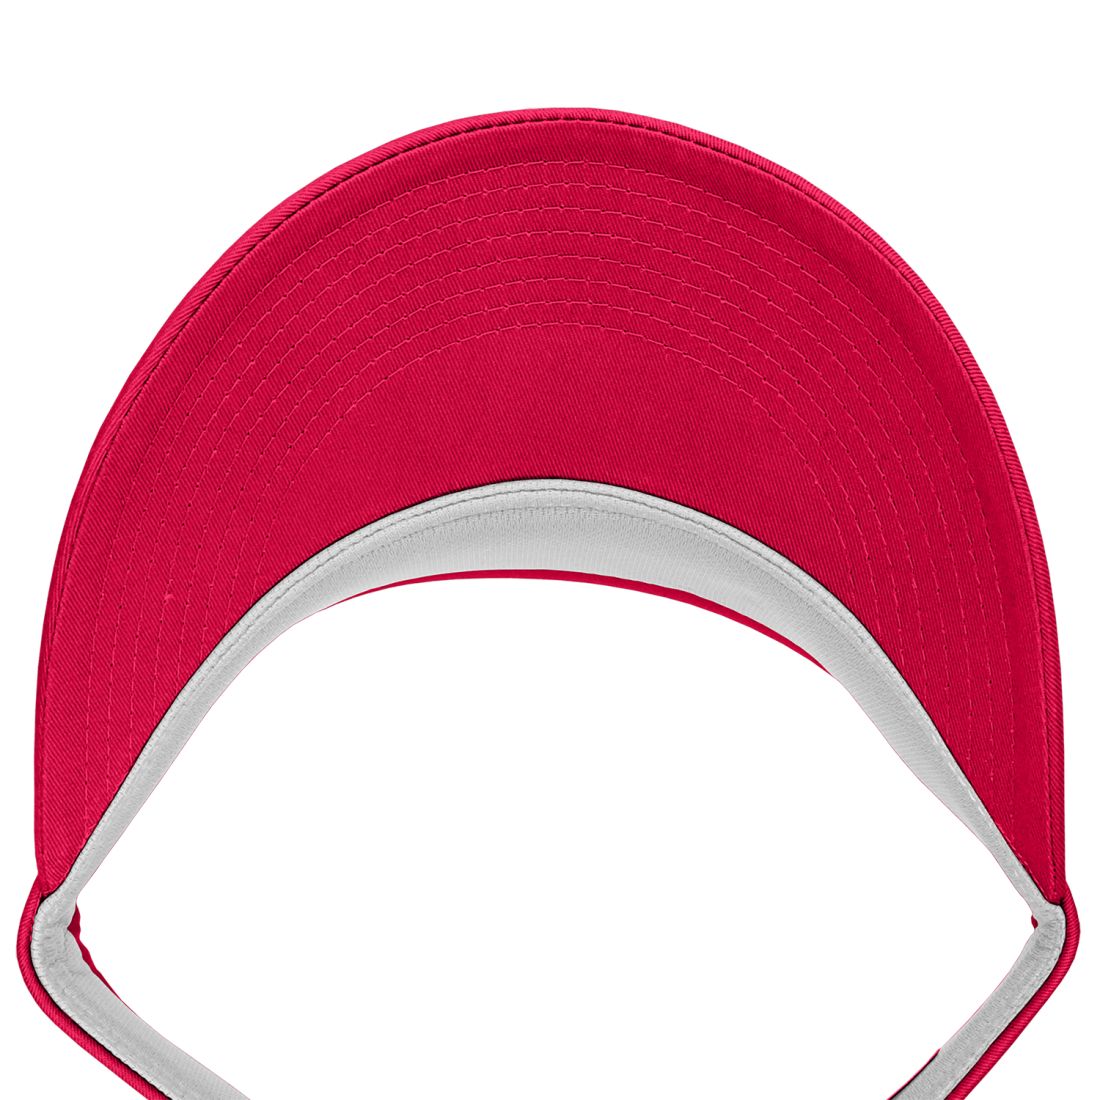 Decky 3015 High Profile Sun Visor Hats Curved Visors Caps Cotton Summer Wholesale